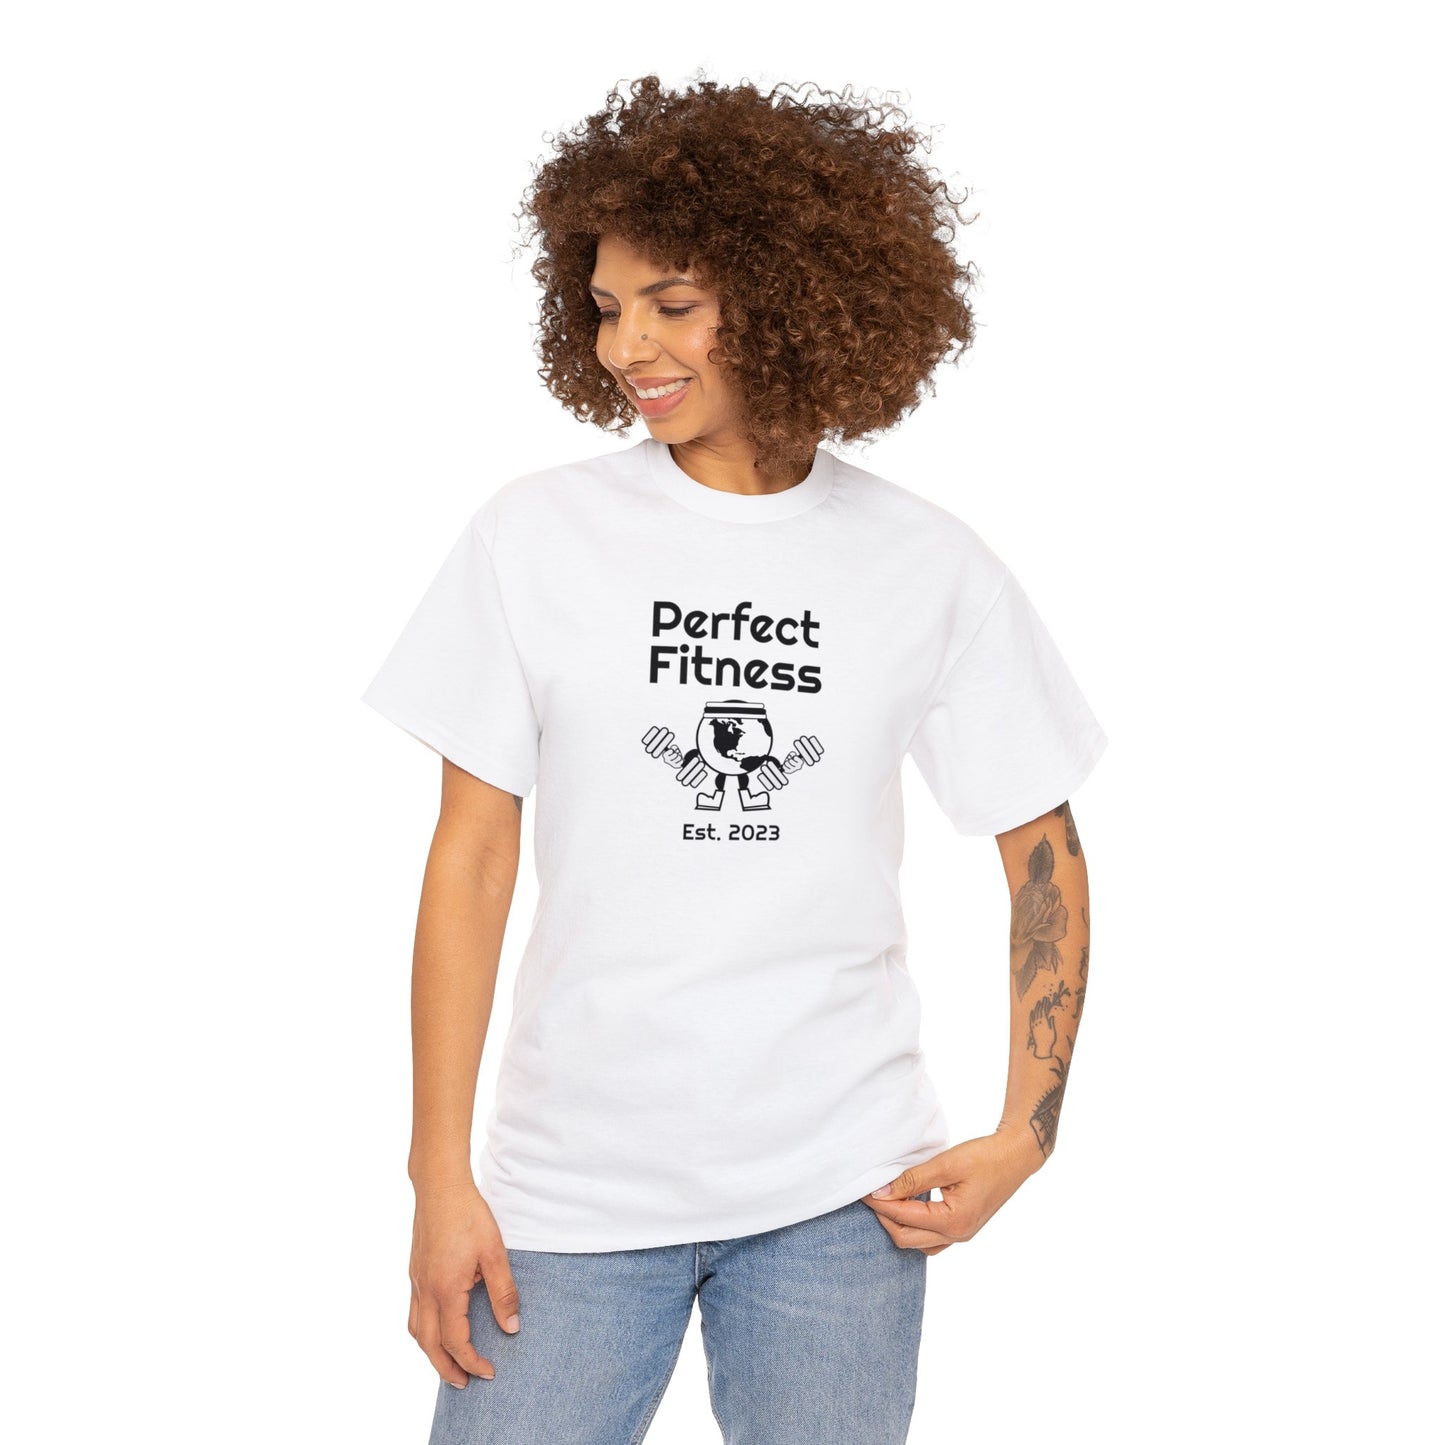 "Perfect Fitness" Shirt